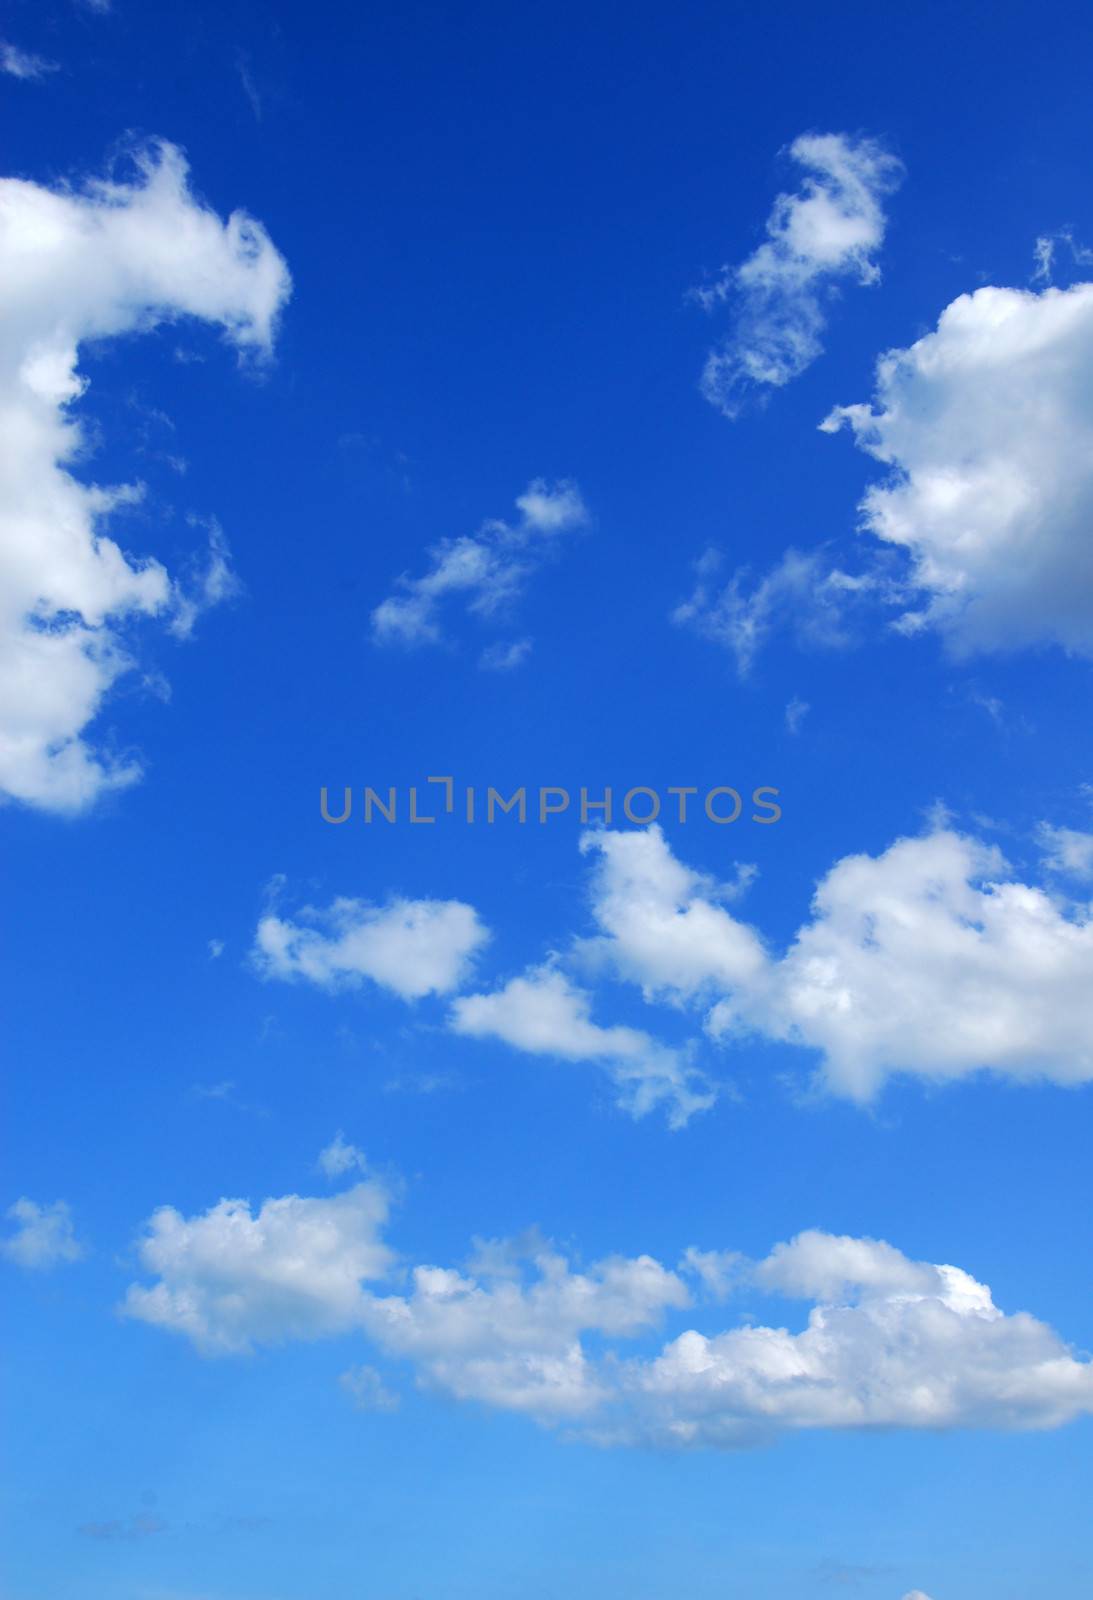 Clouds in blue sky by nikonite